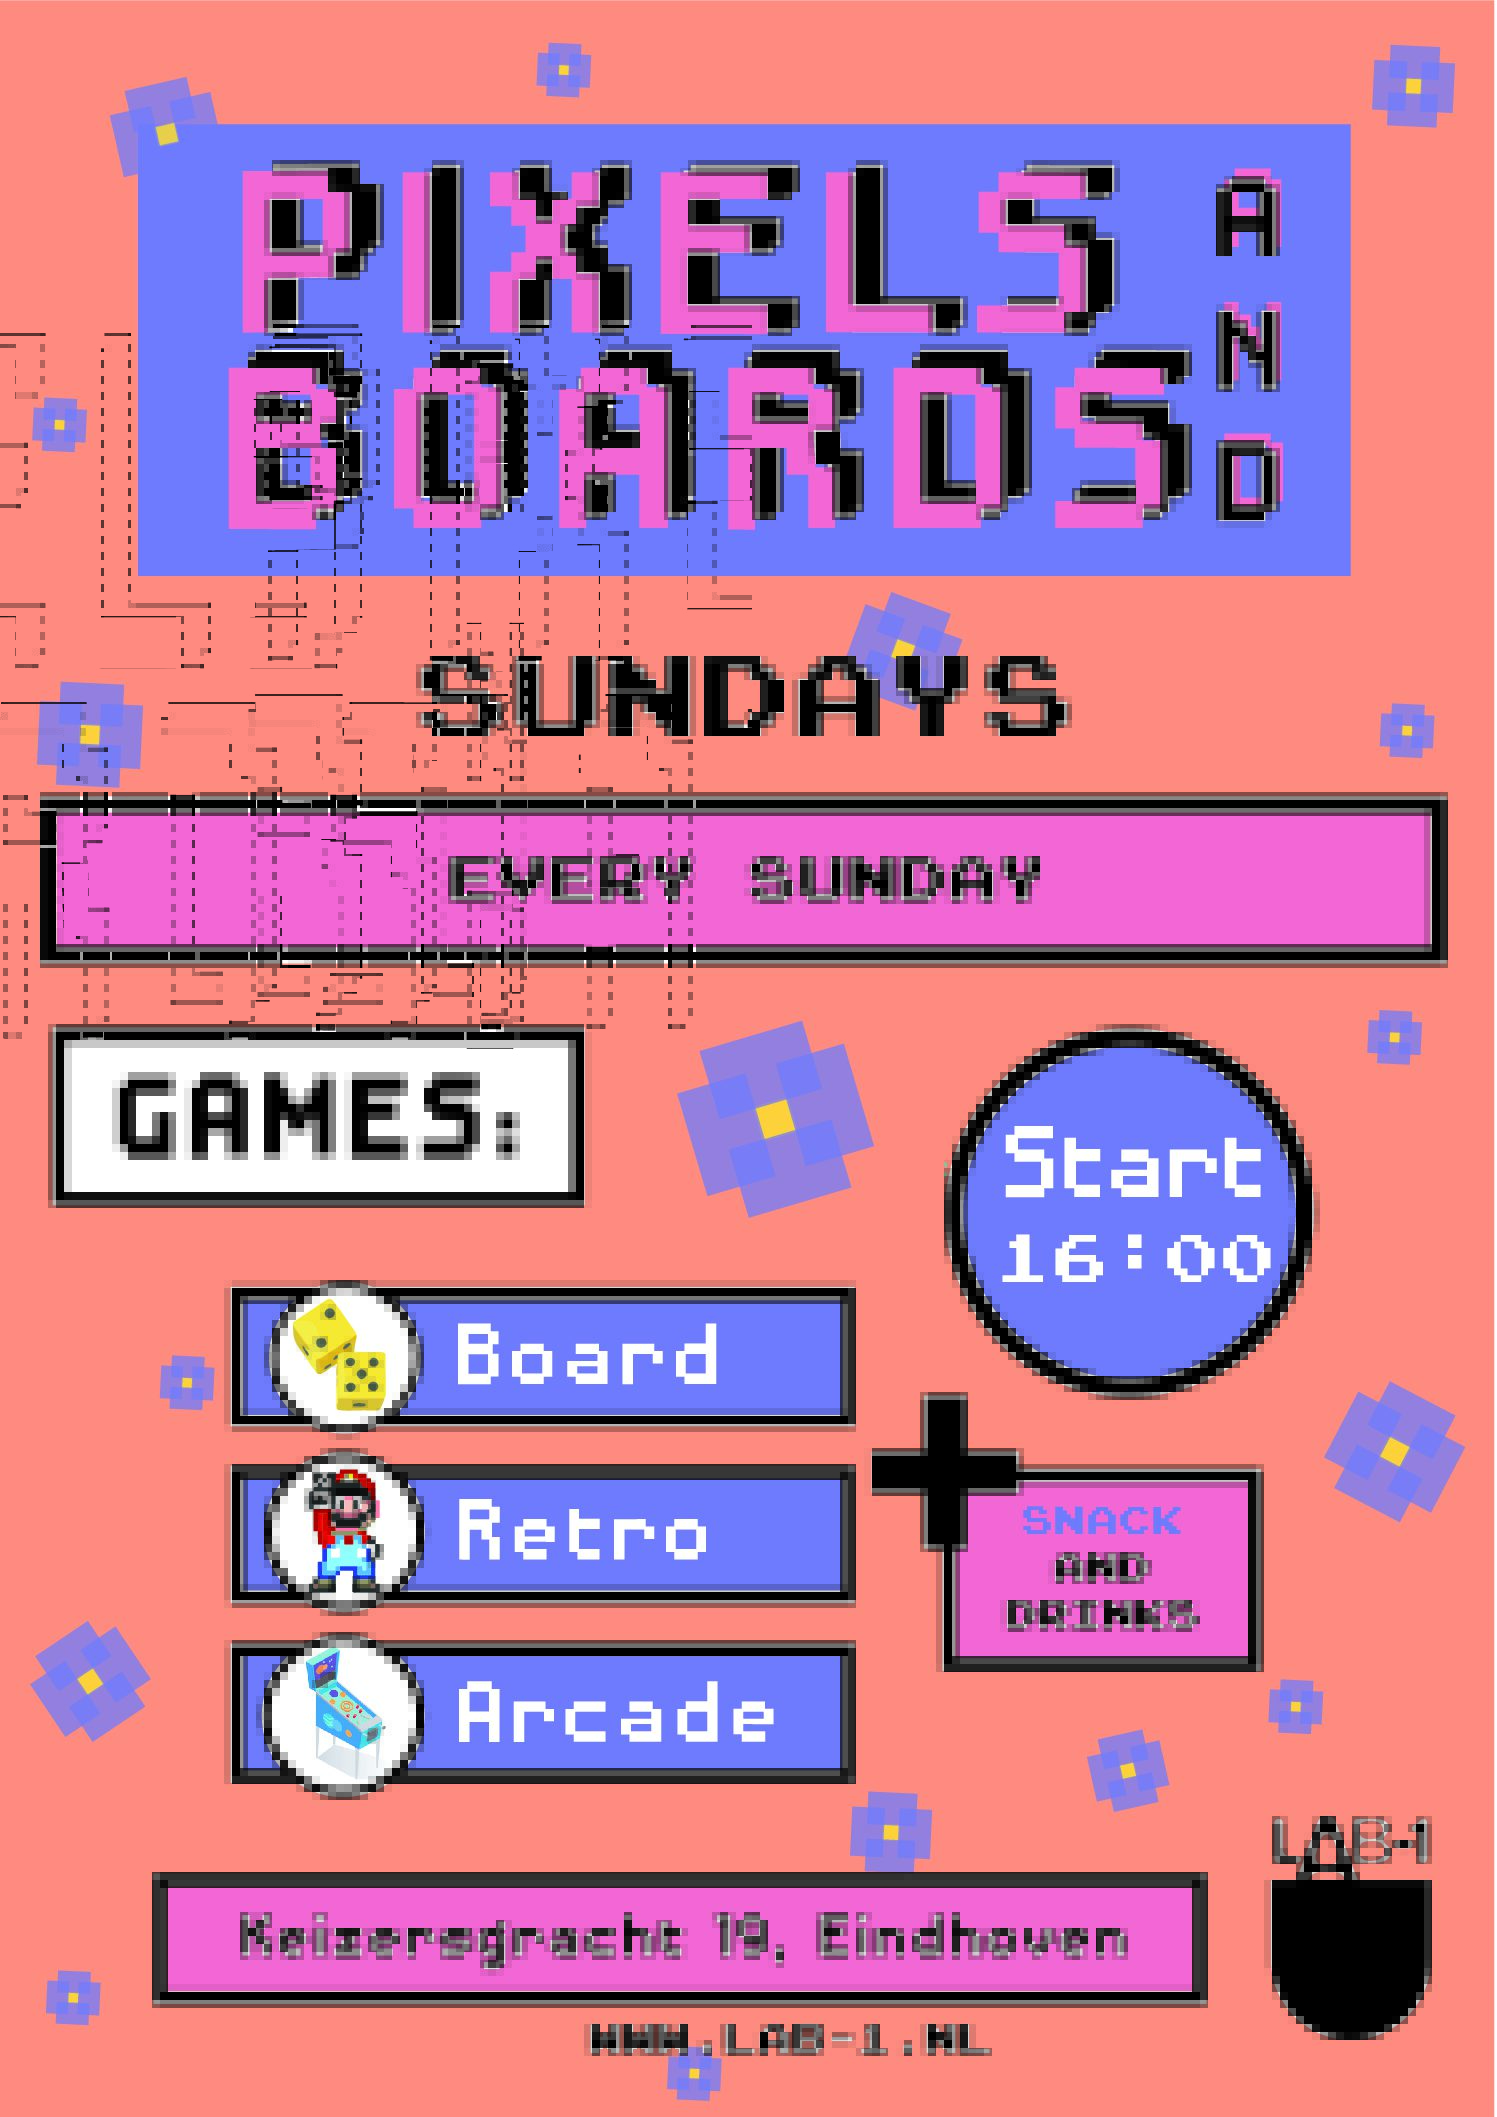 Boardgames on Sundays